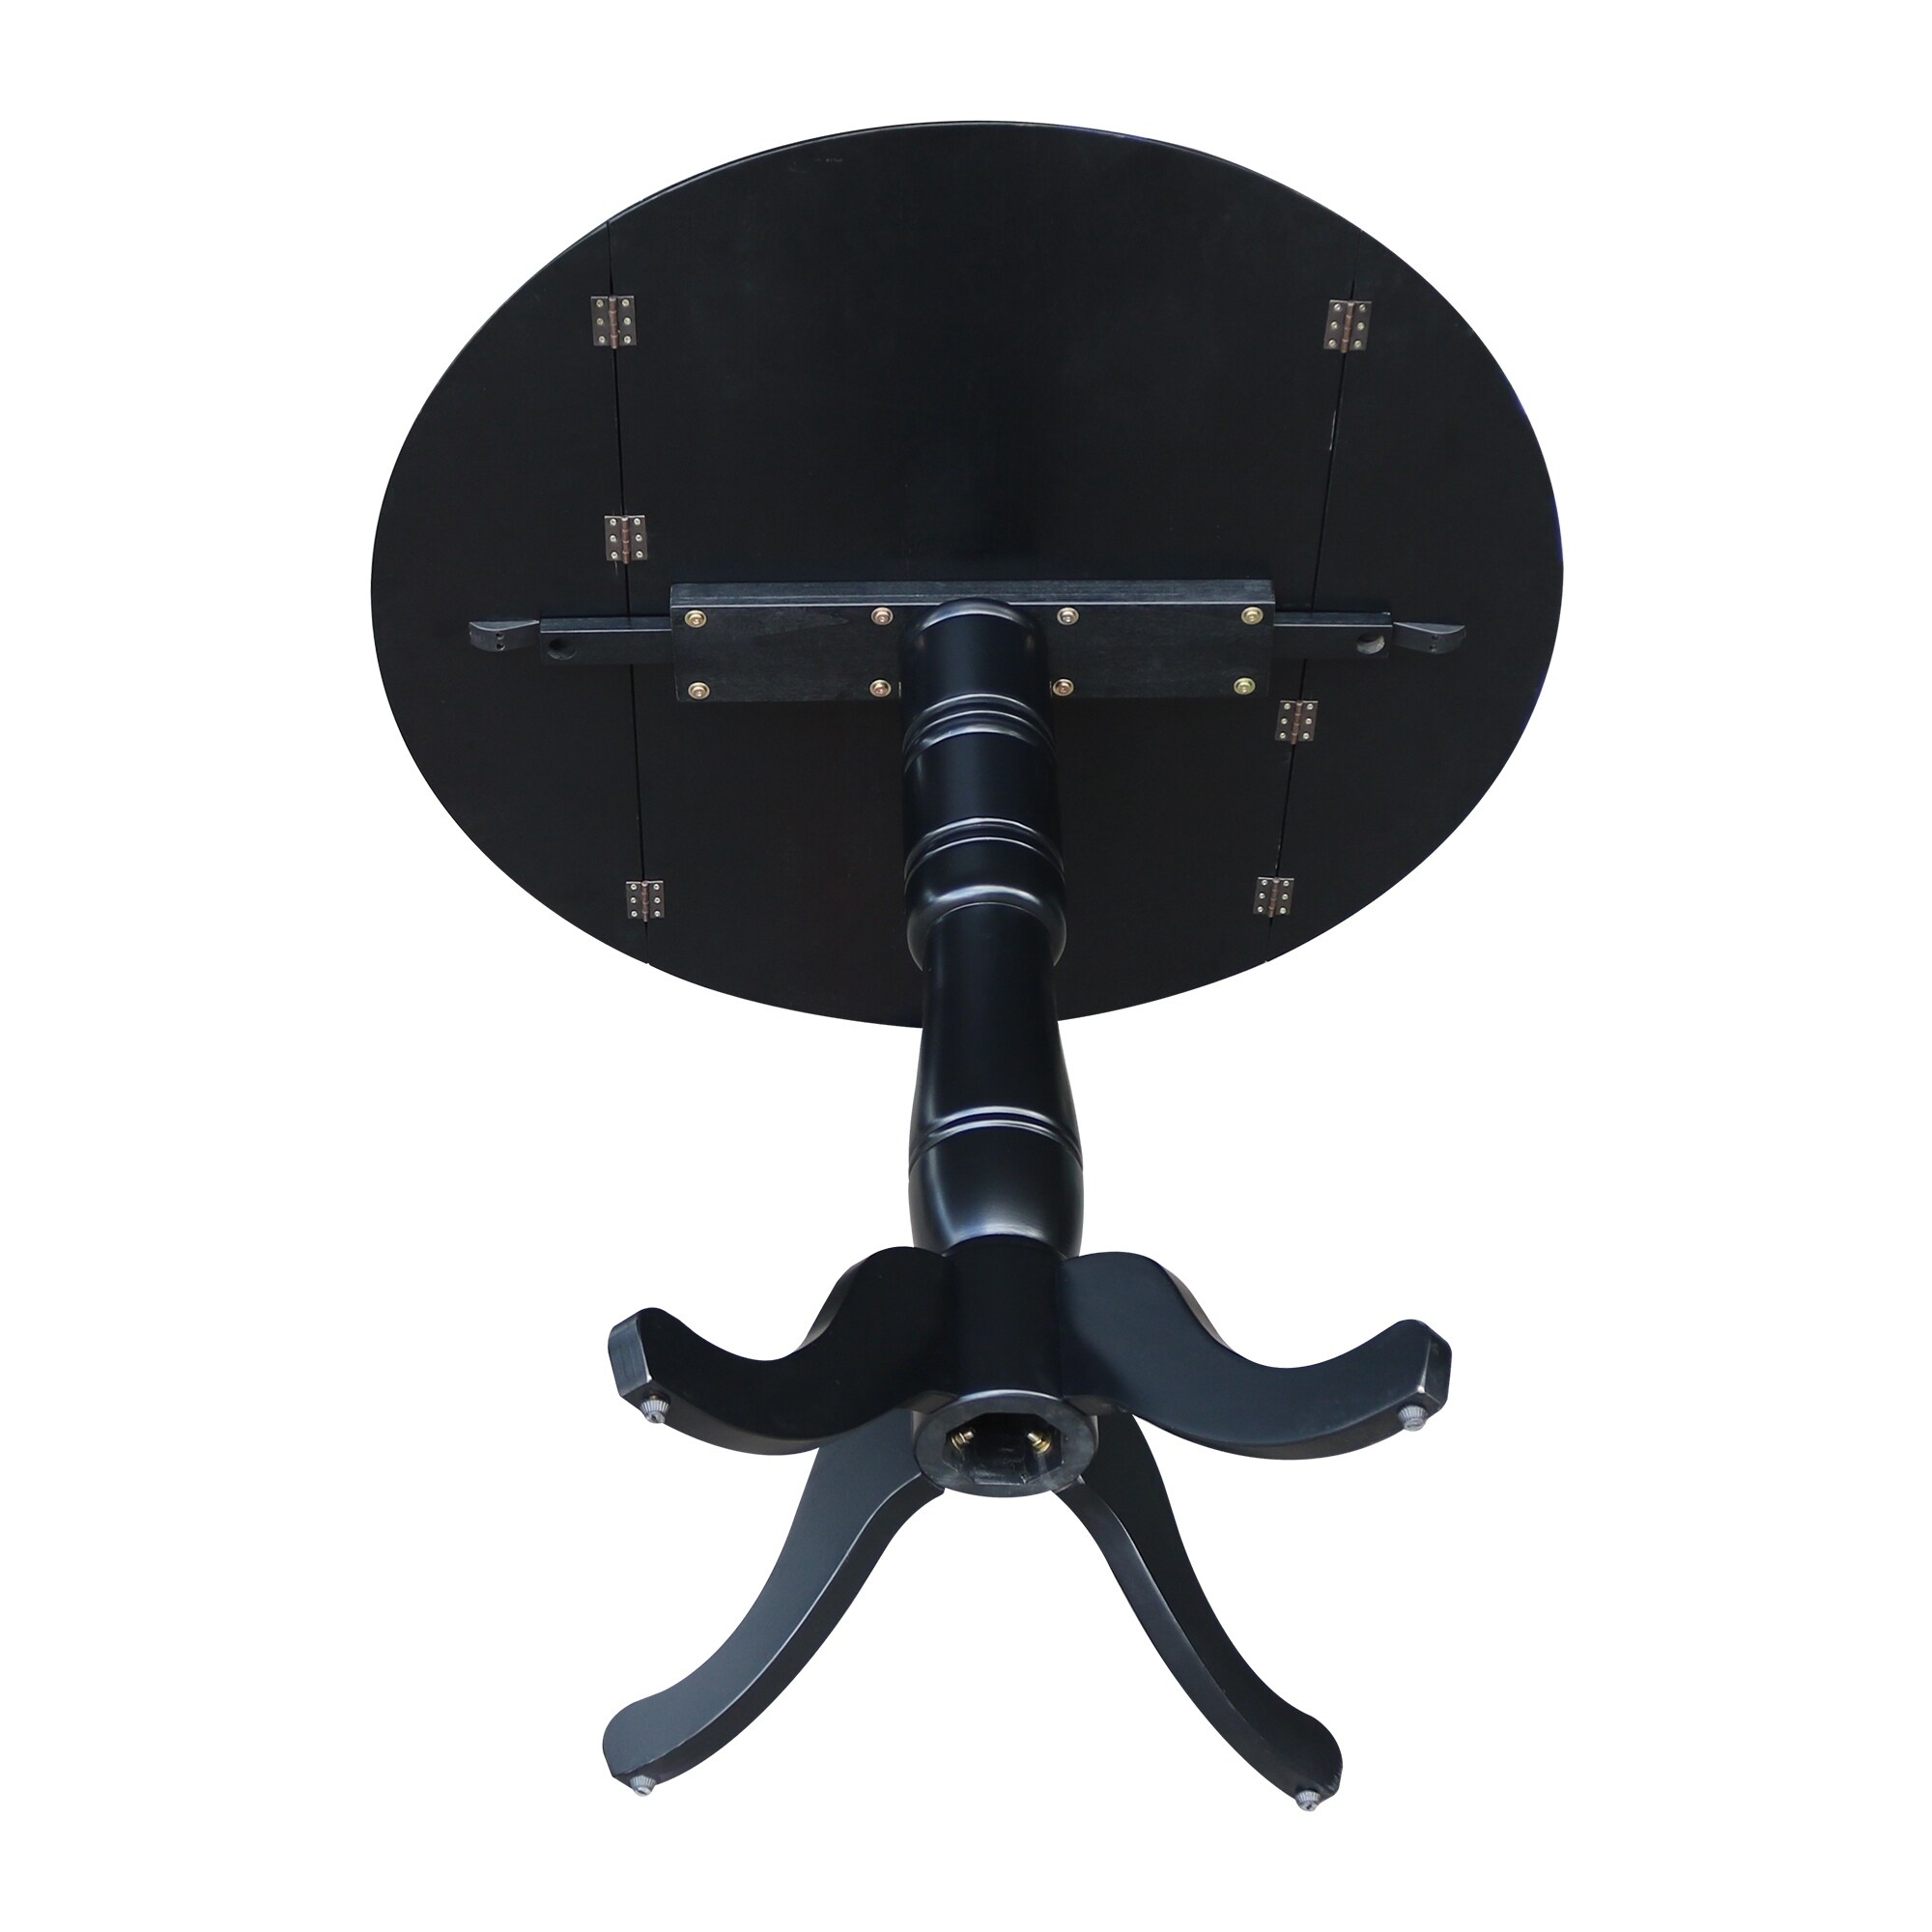 Copper Grove Aixen 42-inch Round Dual Drop Leaf Black Pedestal Table